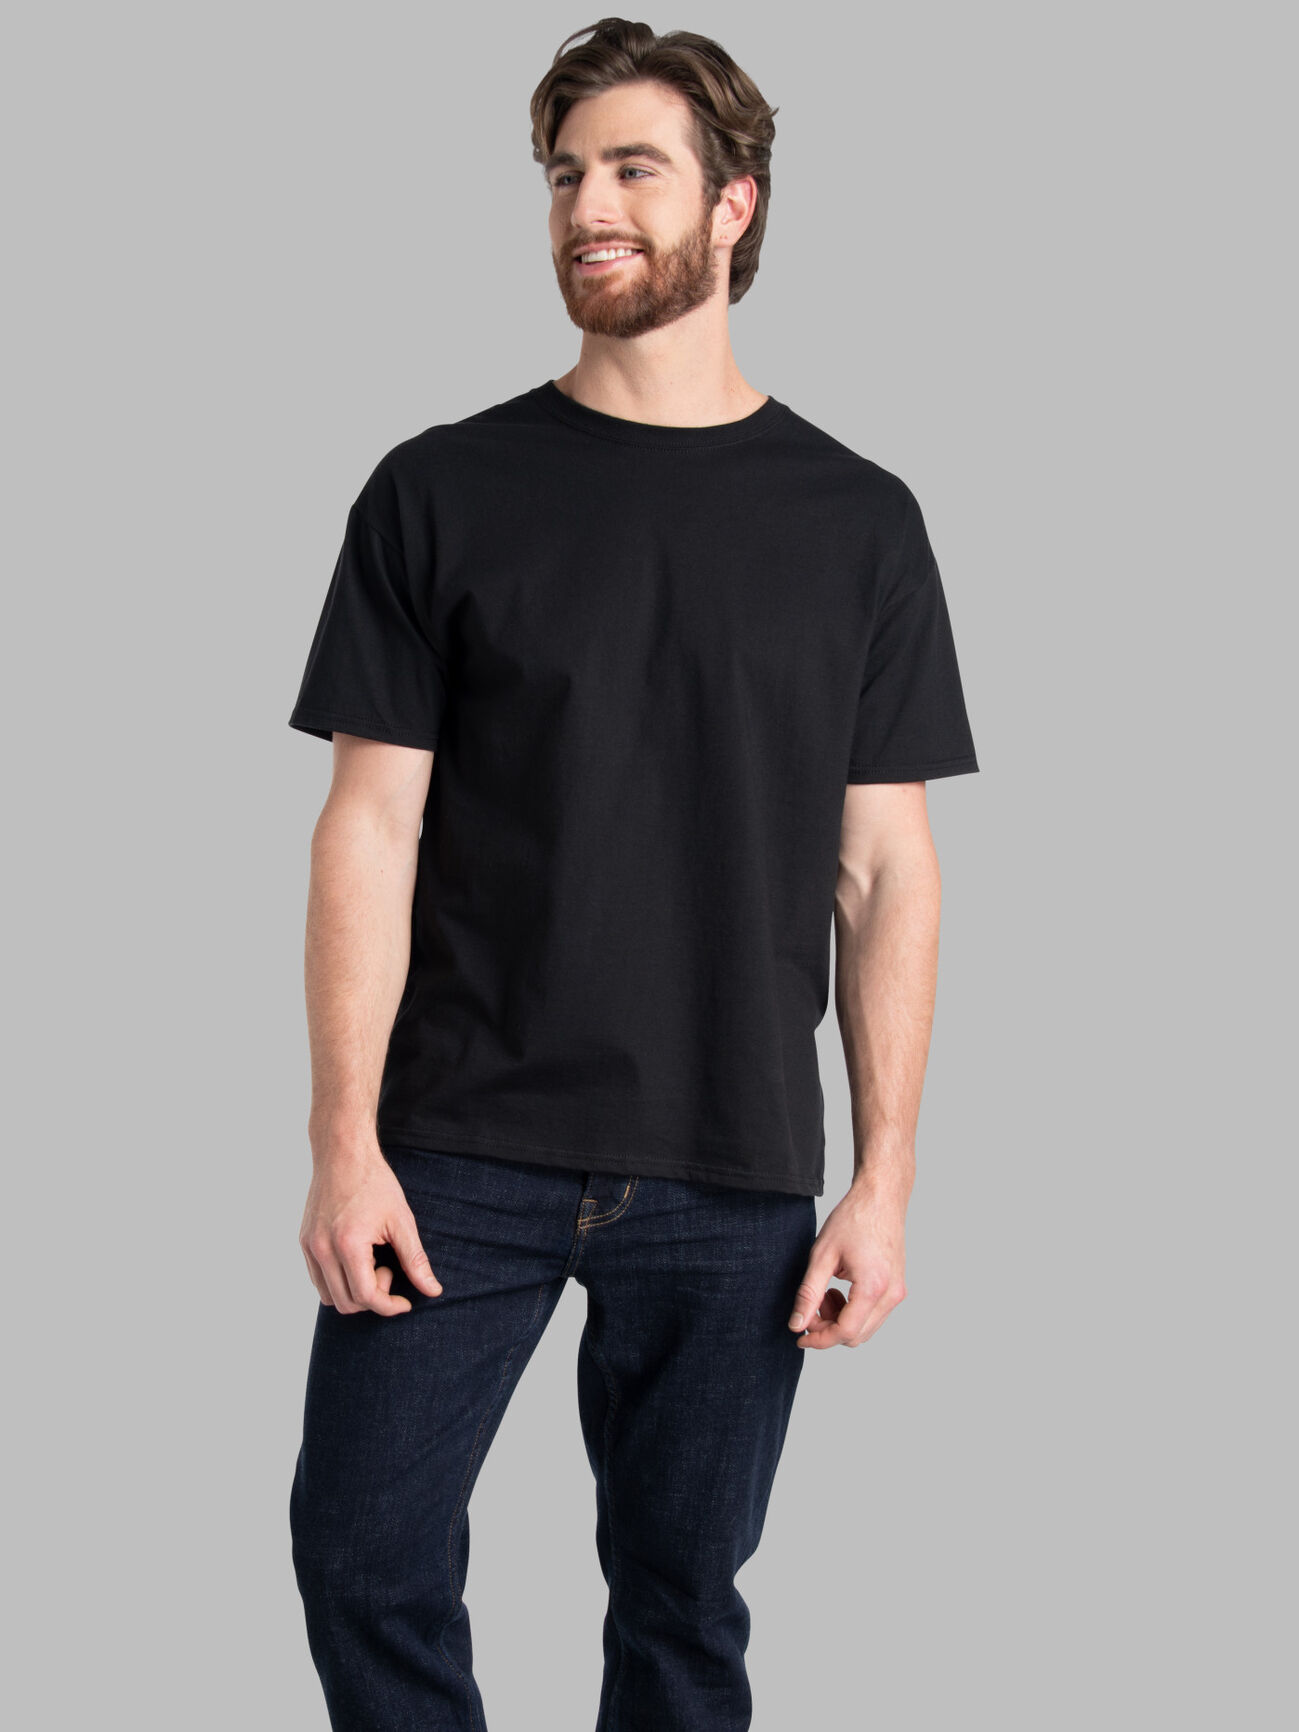 Men’sEversoft®  Short Sleeve Crew T-Shirt, 2 Pack BLACK INK